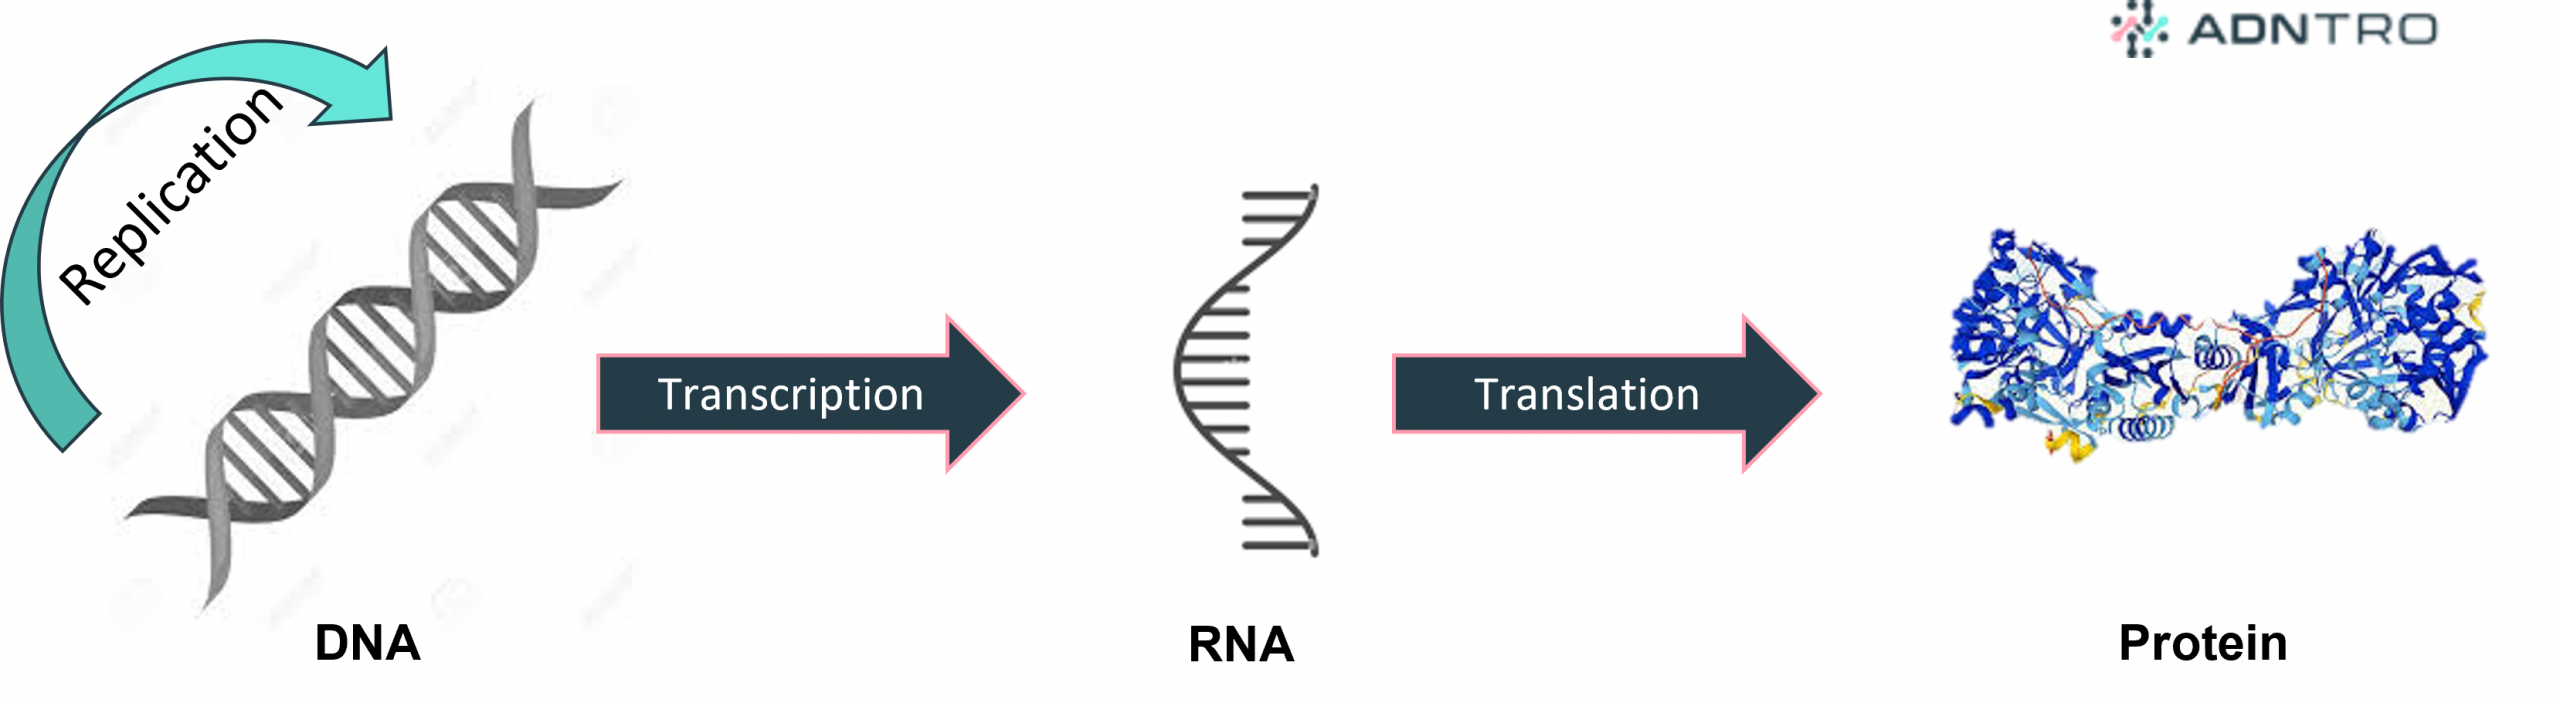 Central dogma of molecular biology - replication, transcription and translation.